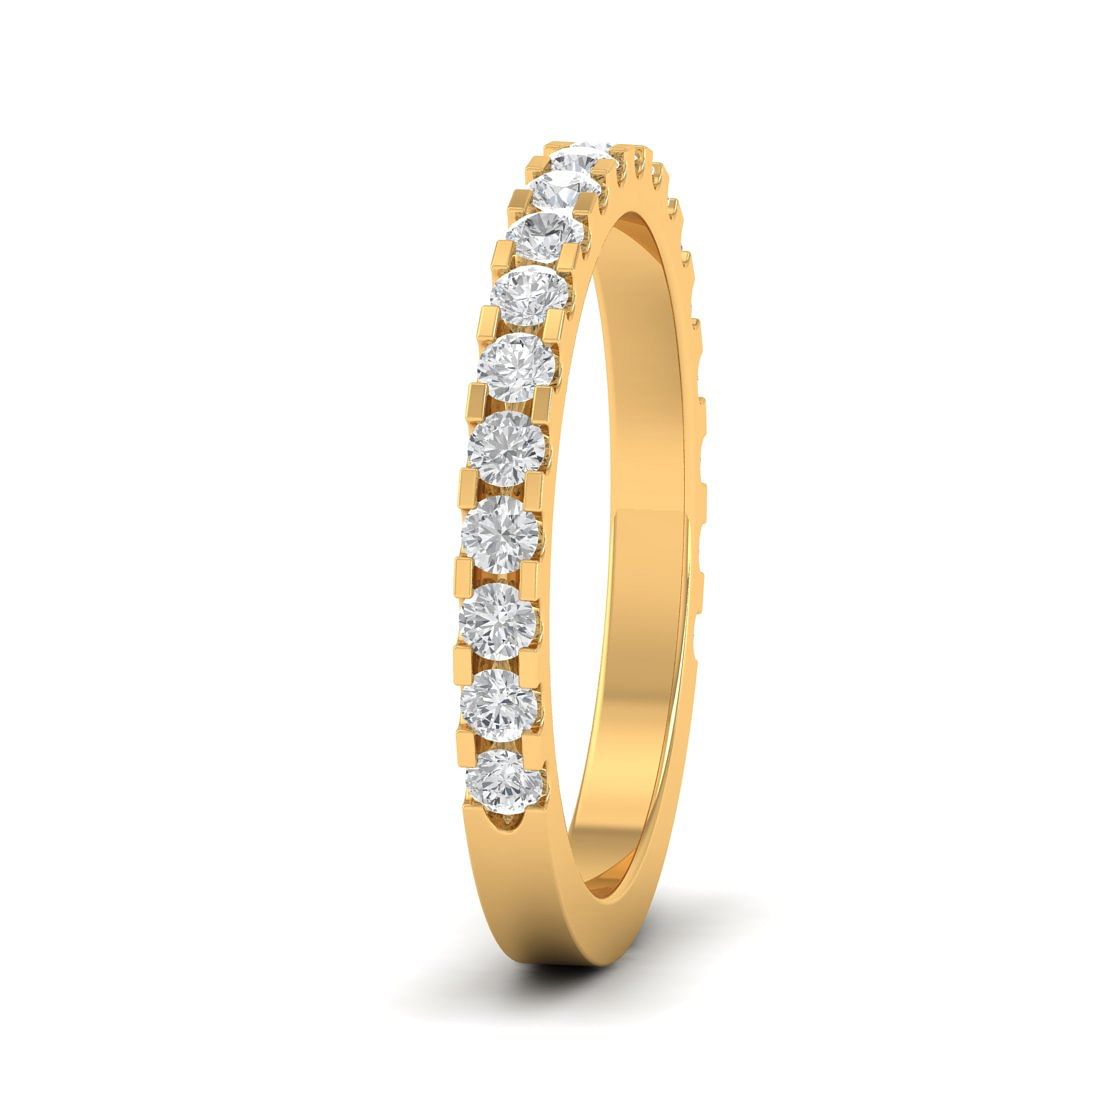 Eva Diamond Wedding Ring For Women With Yellow Gold